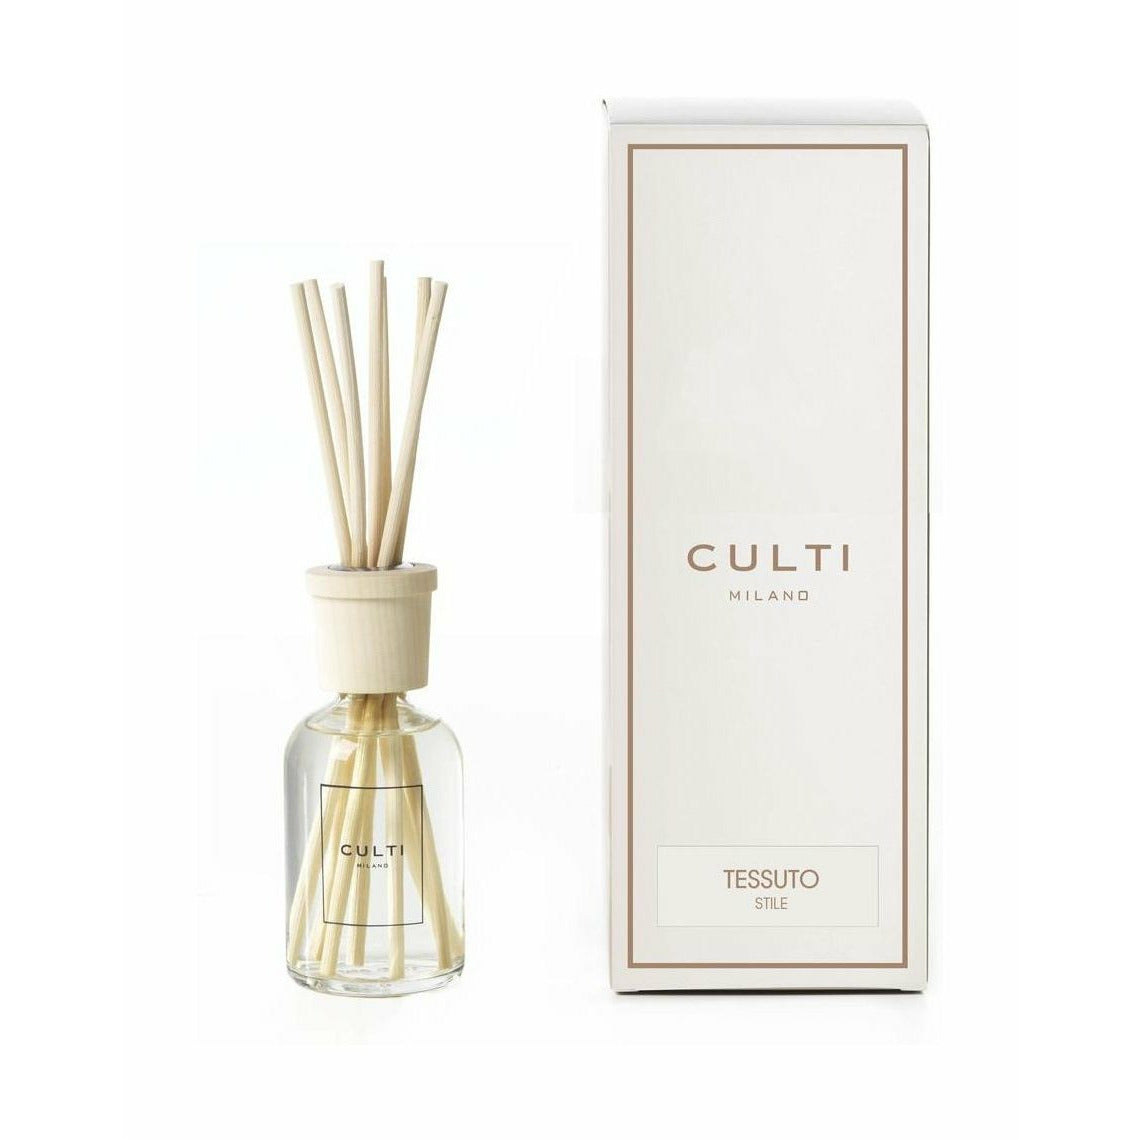 Culti Milano Stile klassisk duftdiffusor Tessuto, 100 ml